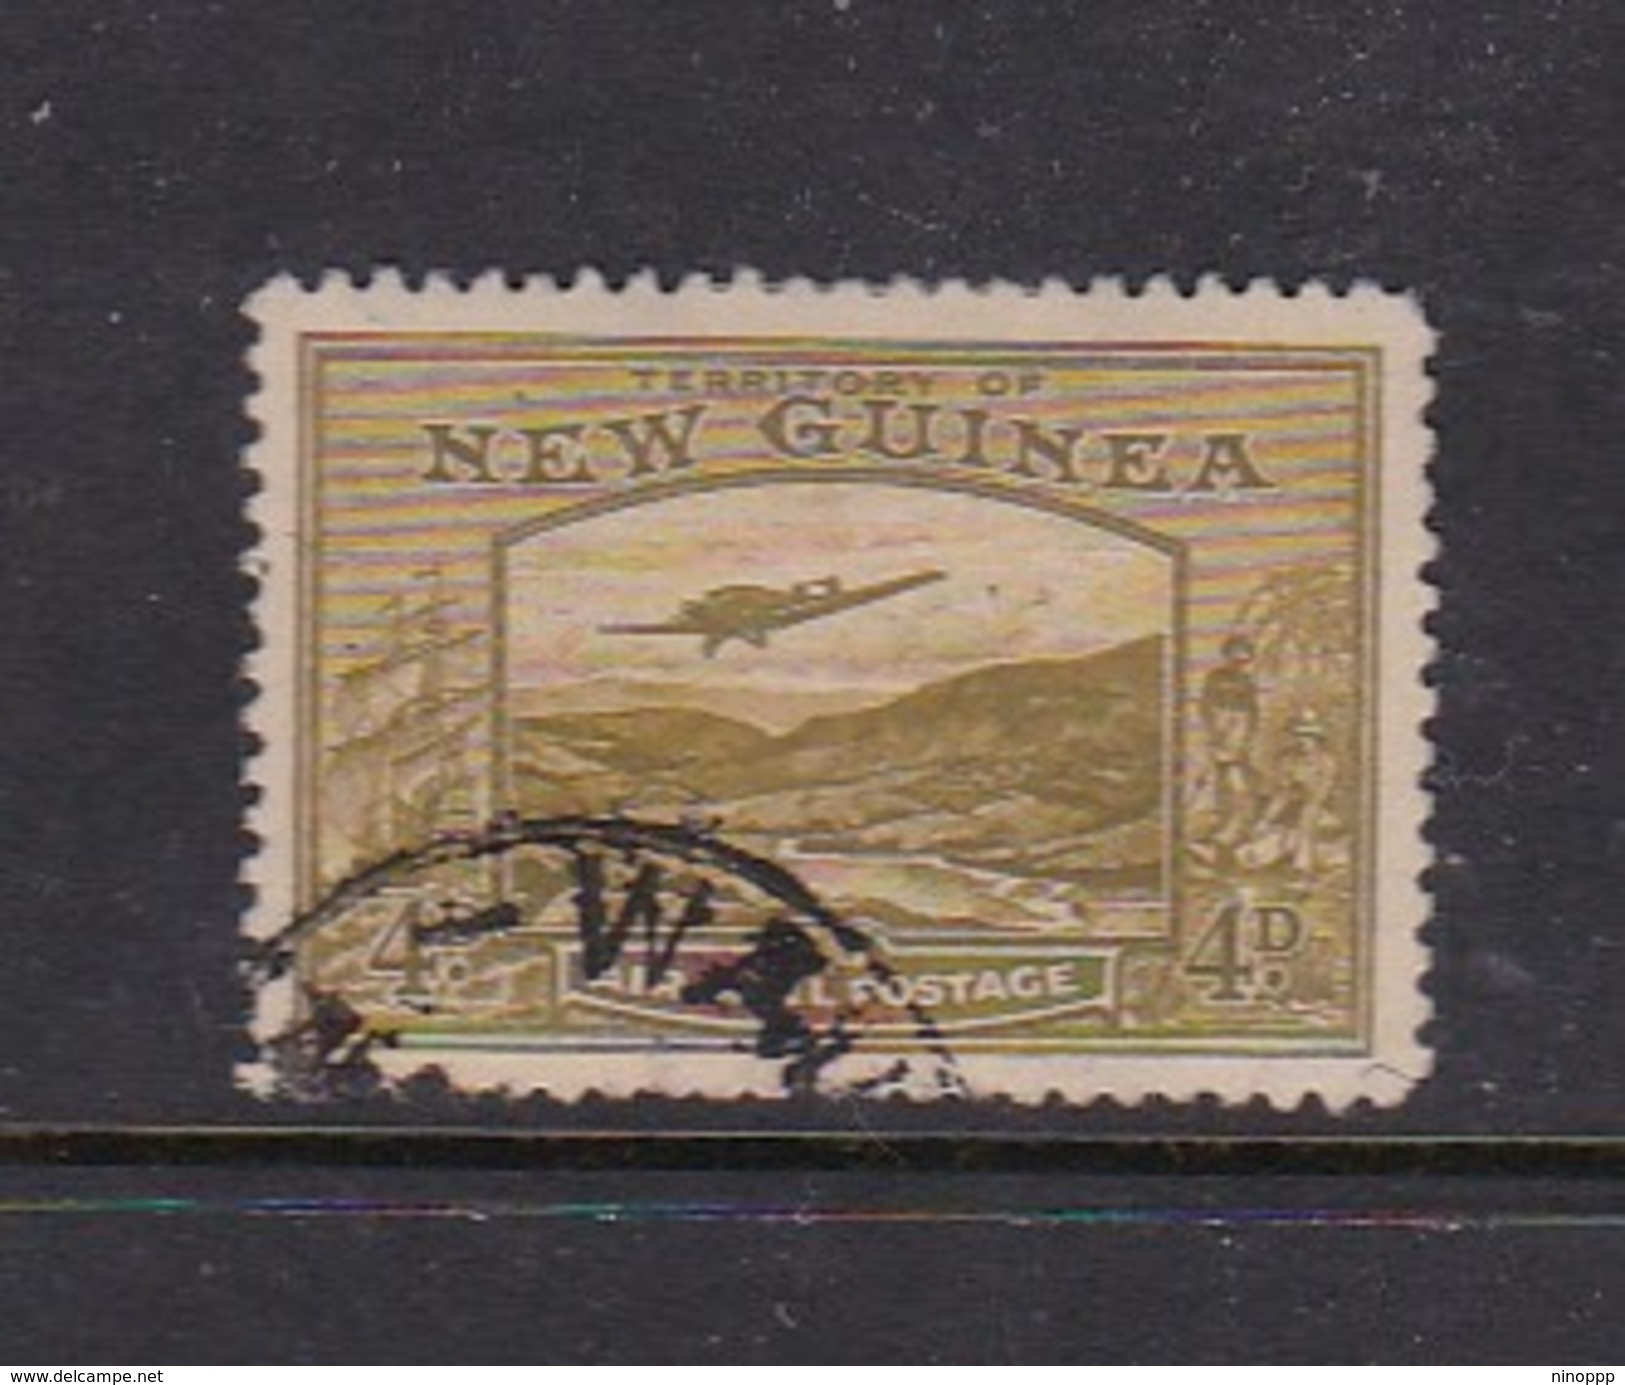 New Guinea SG 217 1939 Bulolo Goldfields Four Pennies Olive Used - Papua New Guinea